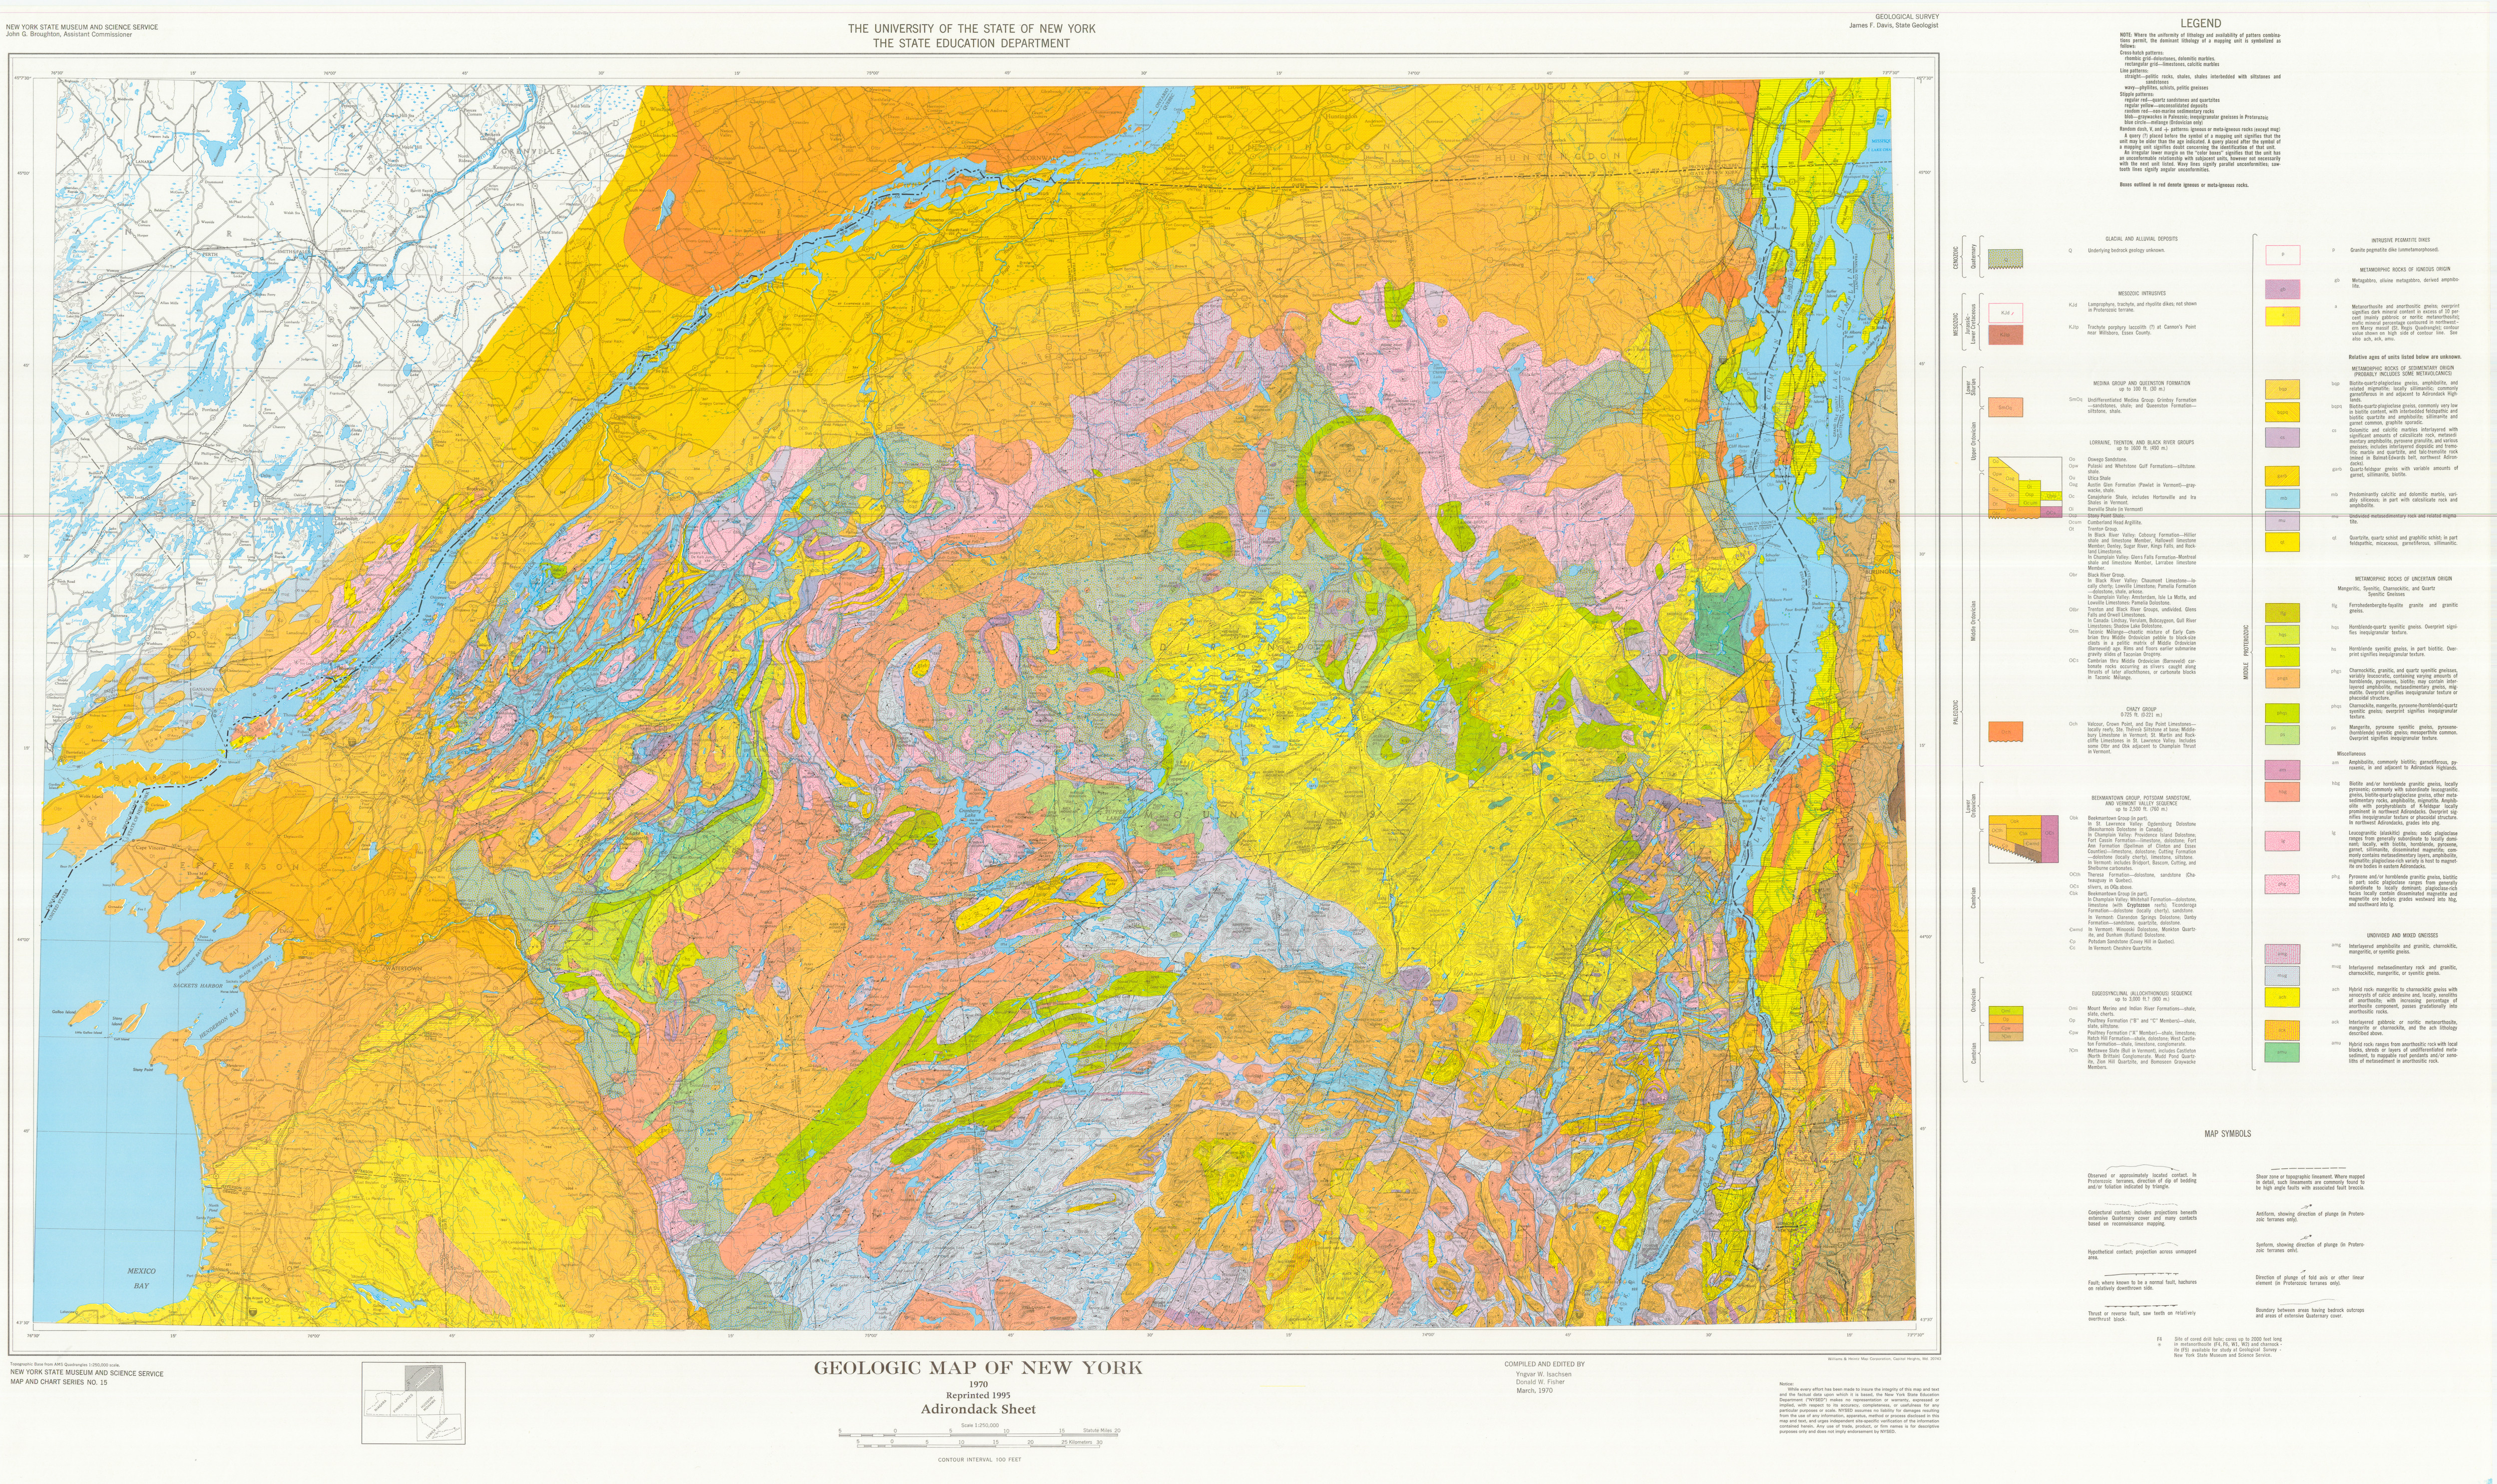 California Geological Survey Maps Valid Geographic Information - California Geological Survey Maps